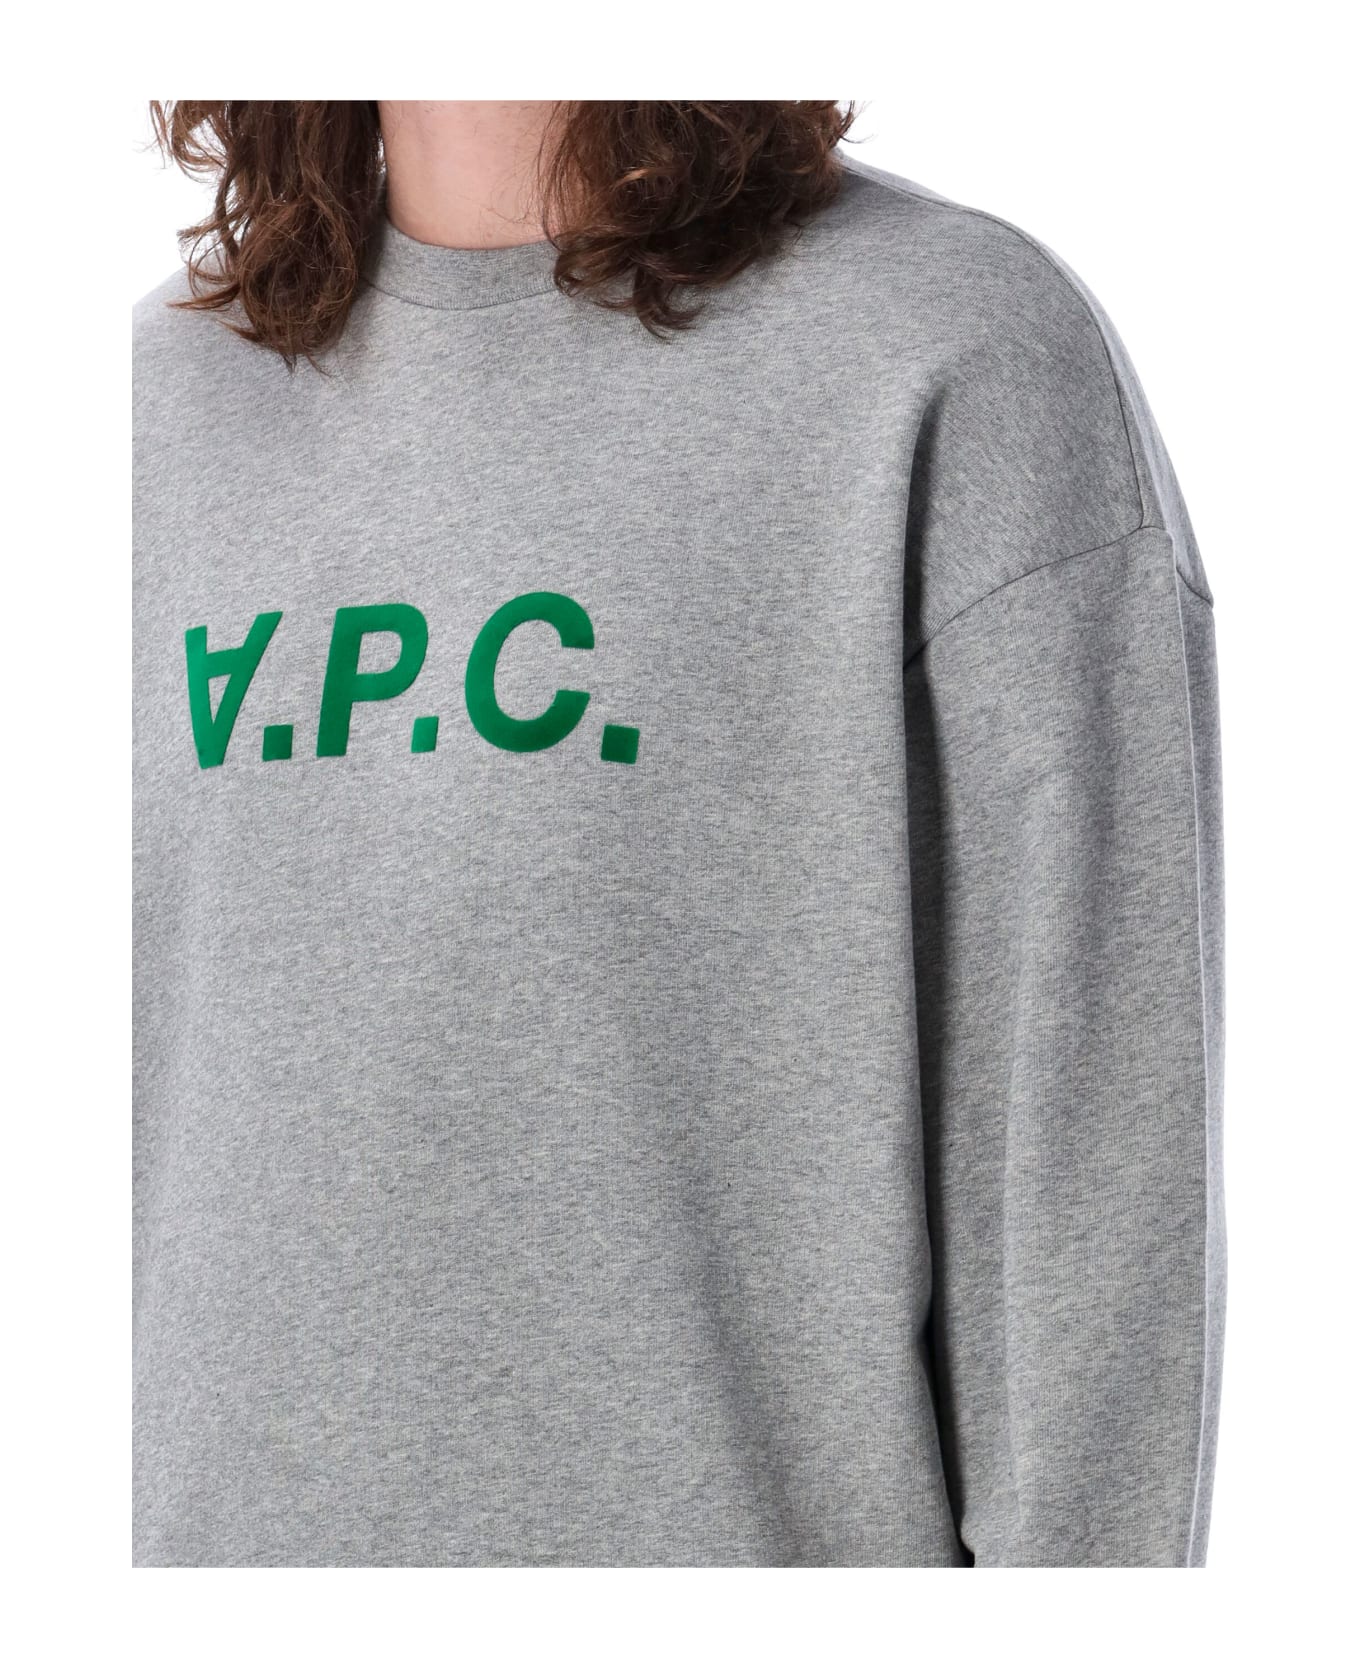 A.P.C. Vpc Sweatshirt - GREY MEL GREEN フリース